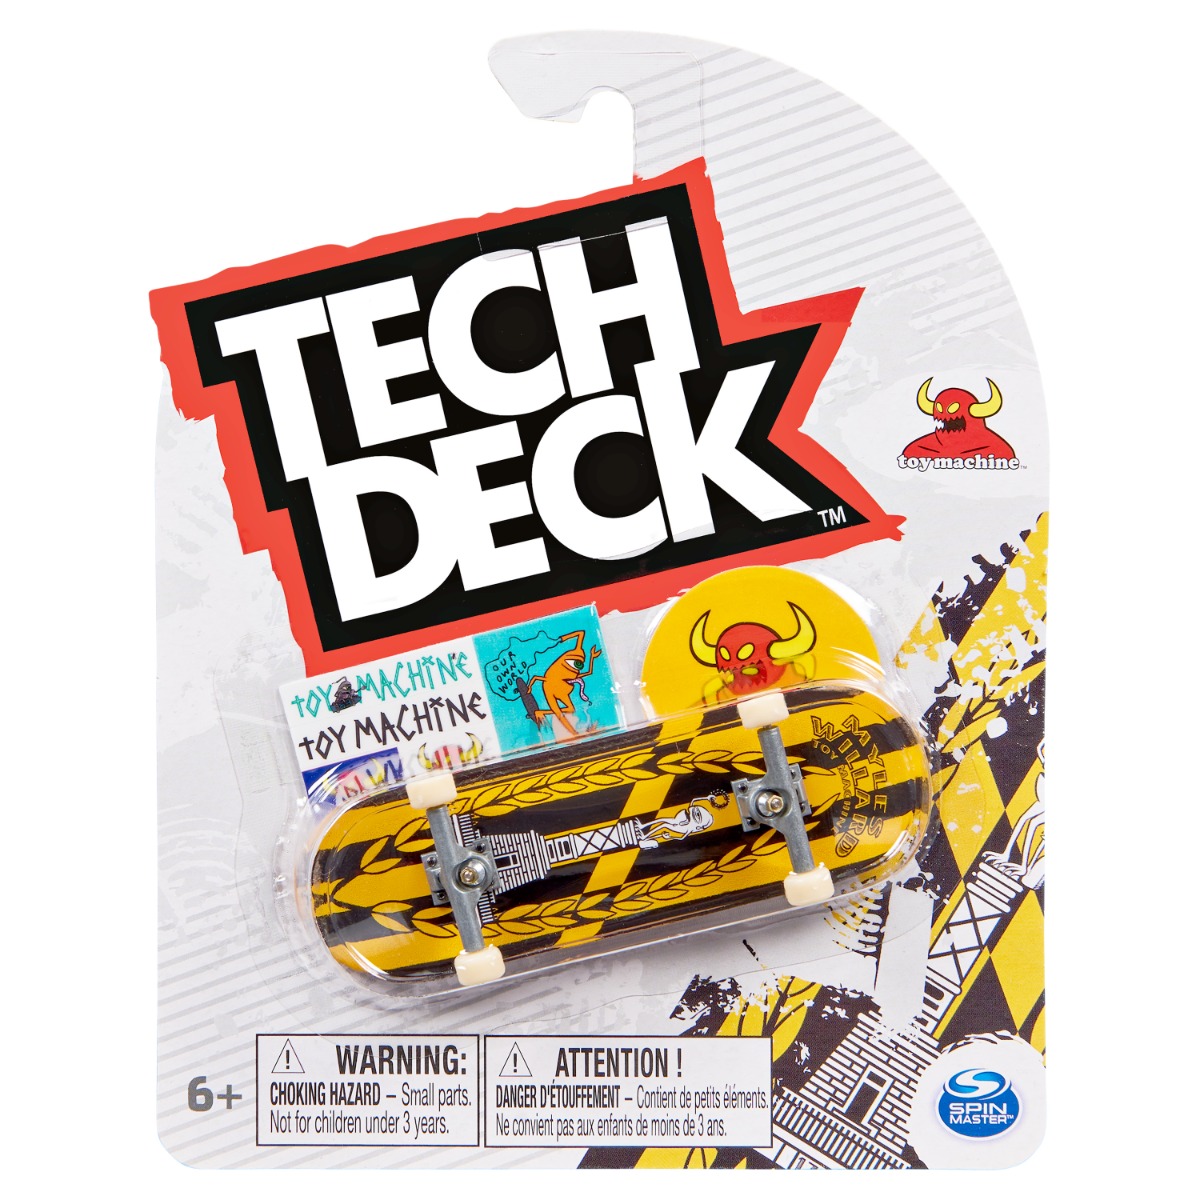 Mini placa skateboard Tech Deck, Toy machine Miles Willard, 20141223